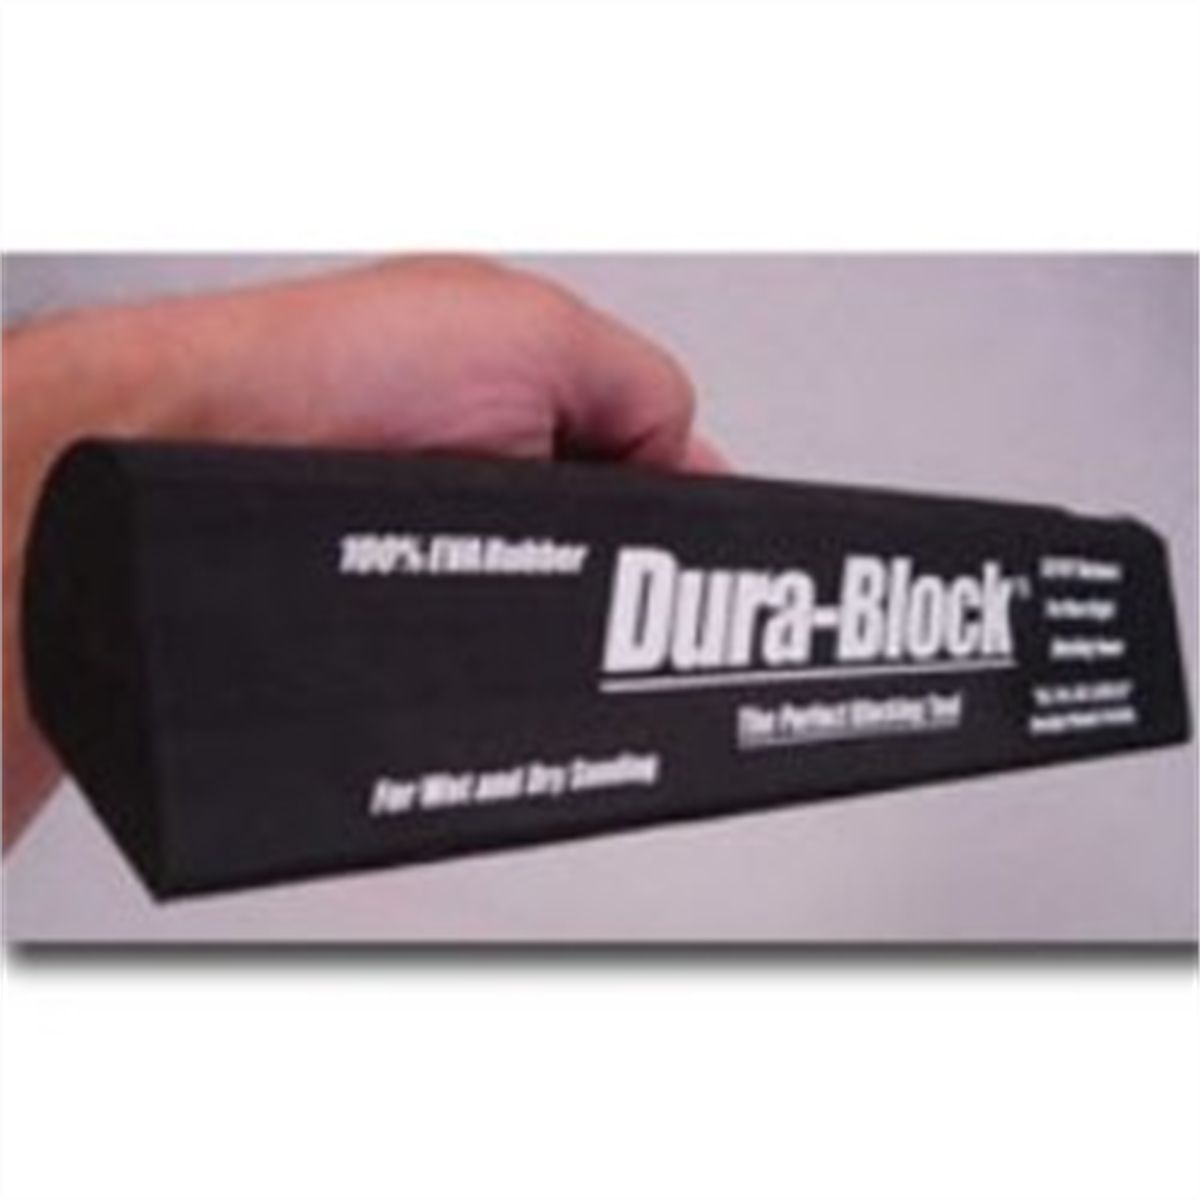 Dura-Block 16" x 2-3/4" Sanding Block AF4403 